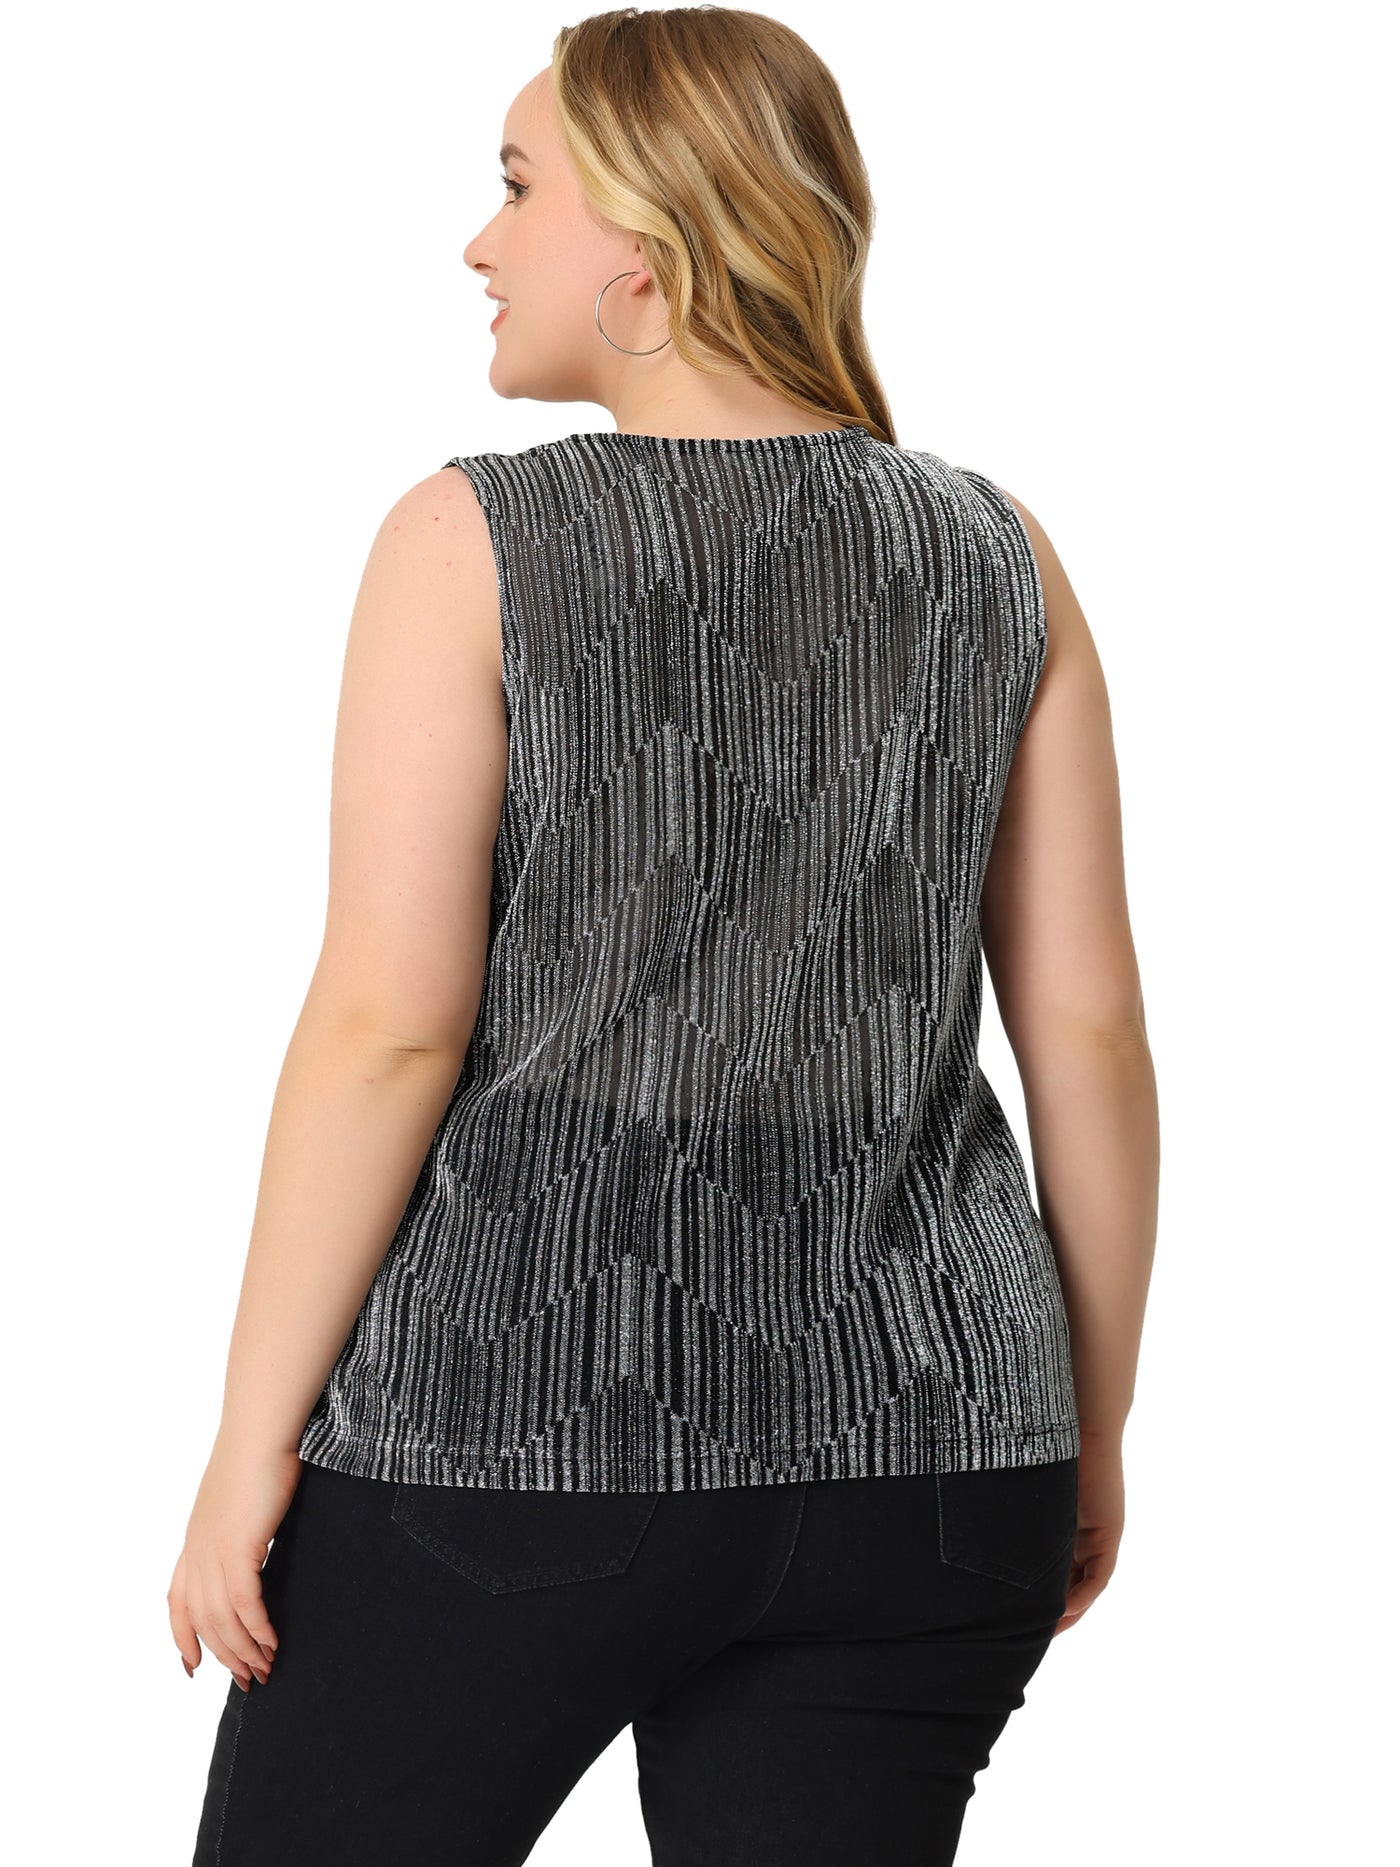 Bublédon Plus Size Sequin Tops for Women Sleeveless Glitter Gradient Tank Club Party Vest